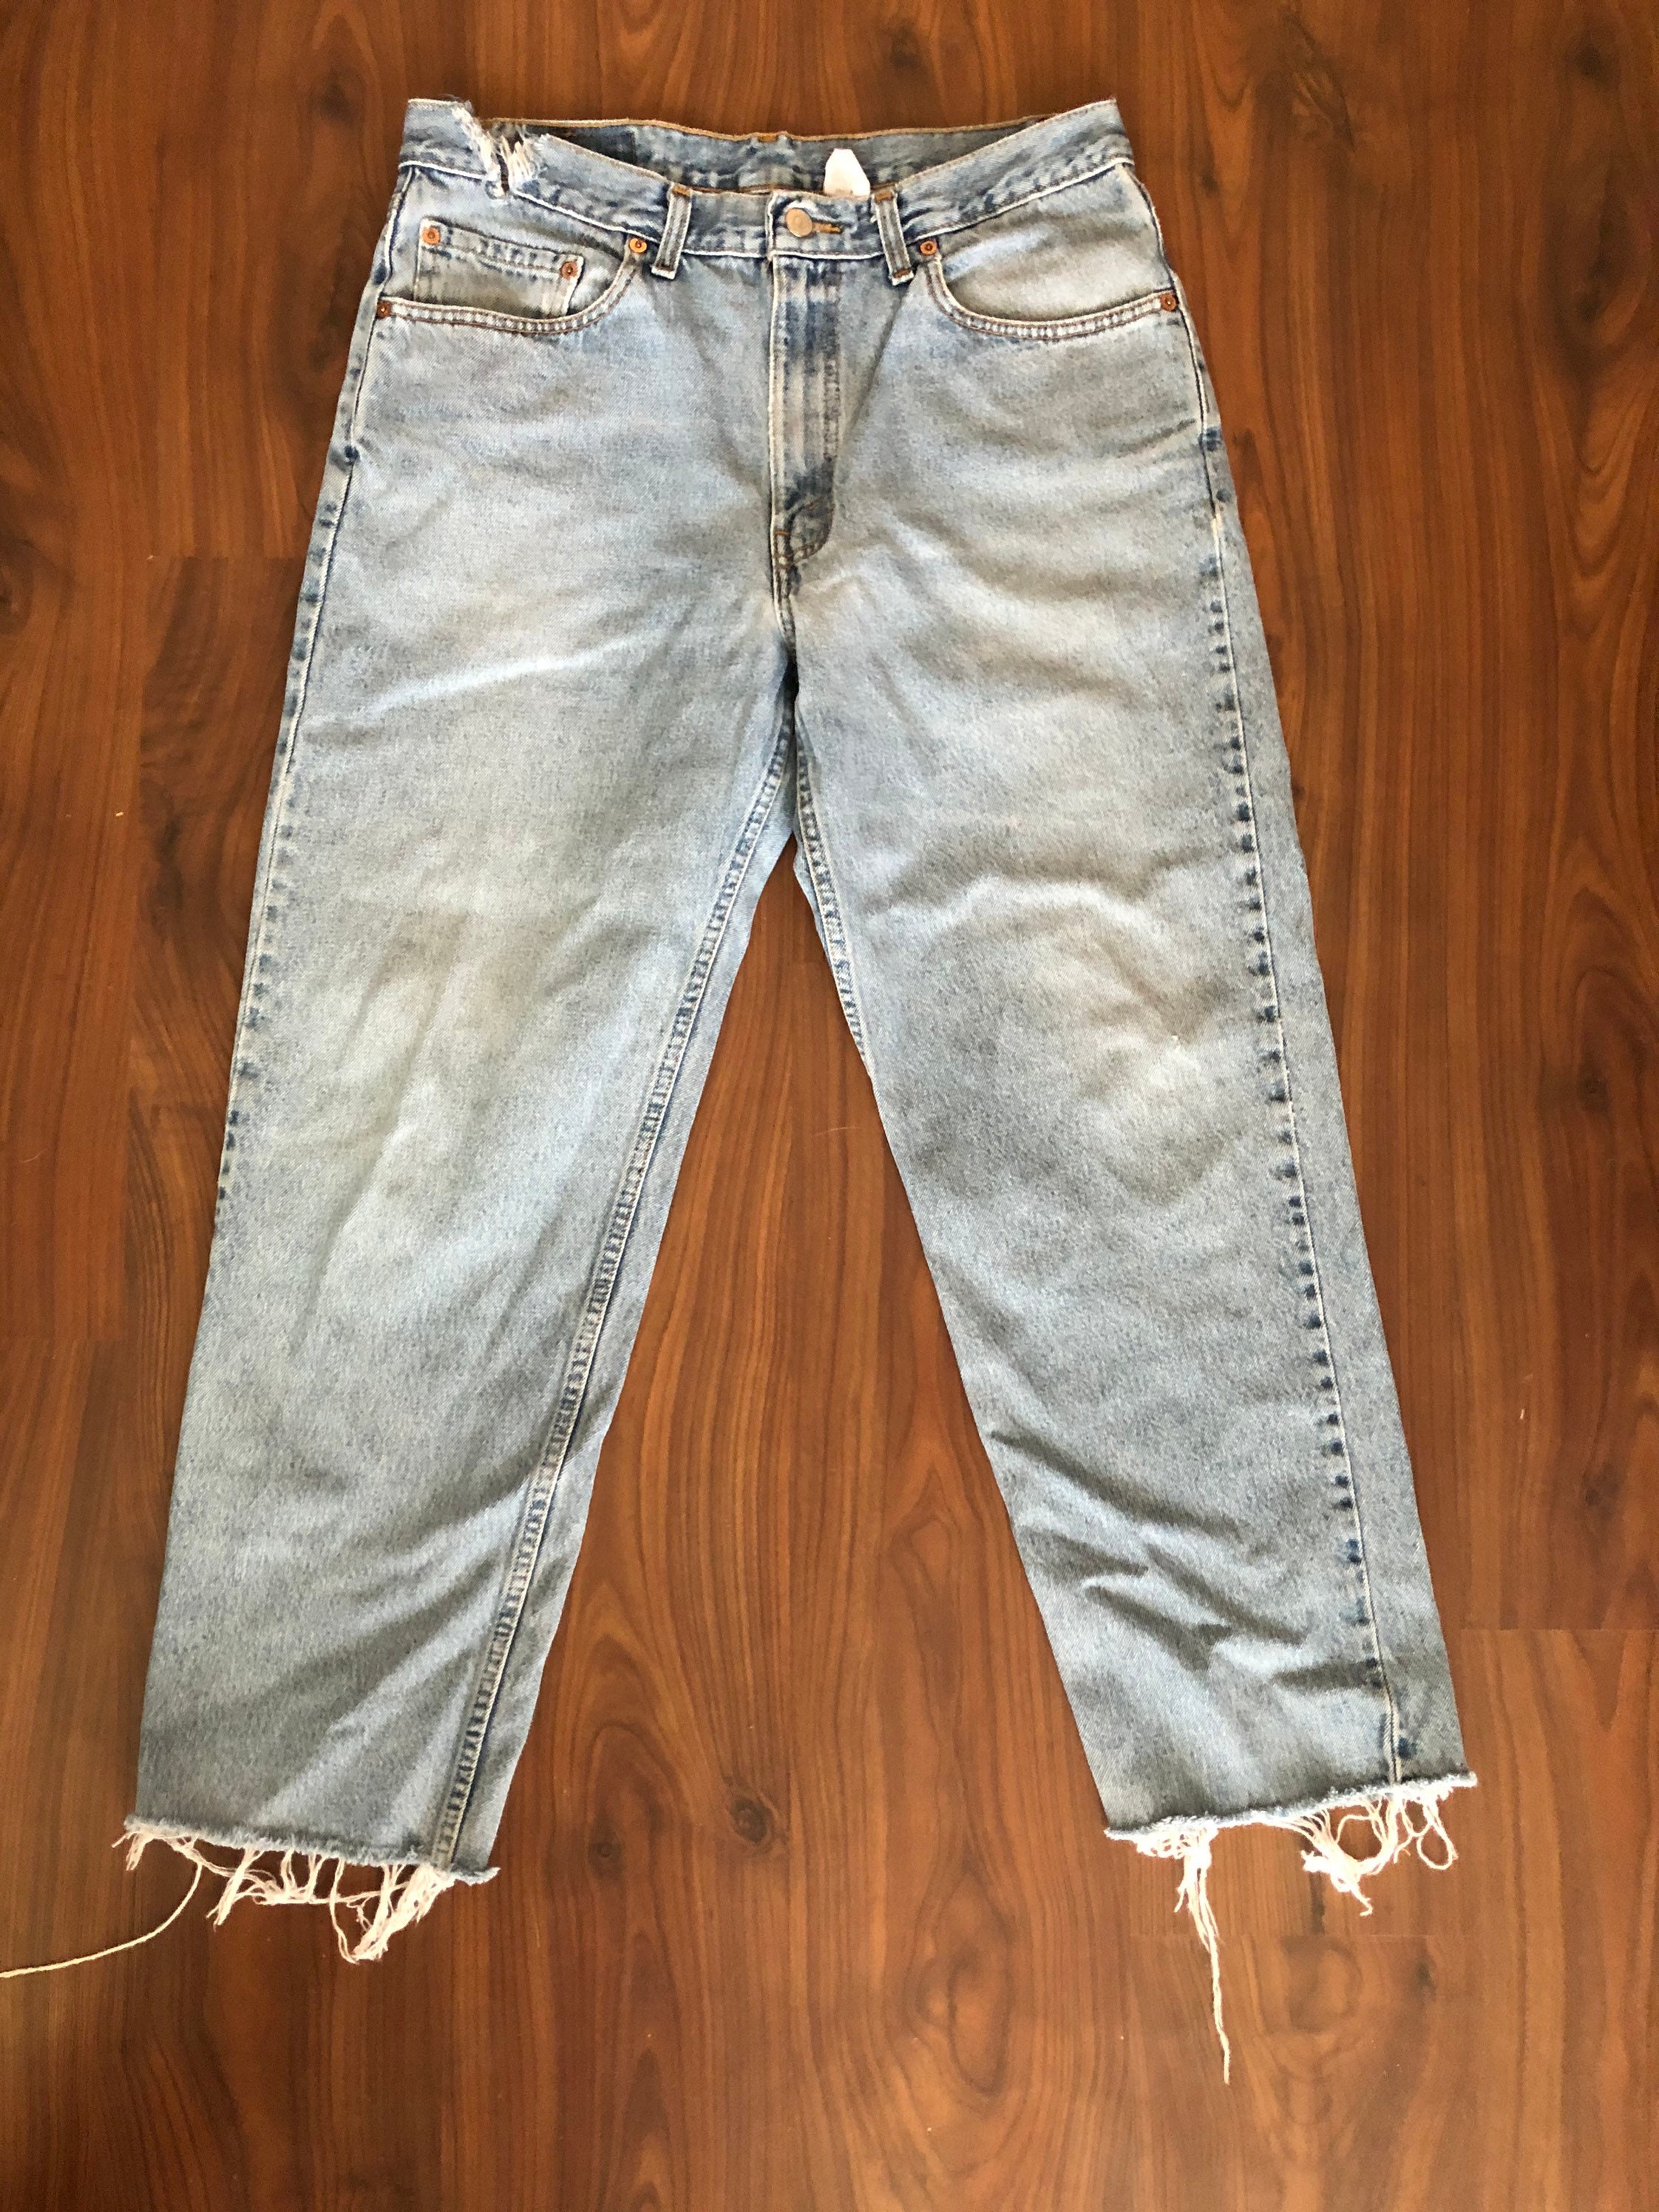 Vintage Levis 550 red tab jeans size 35W 30L runs a bit | Etsy